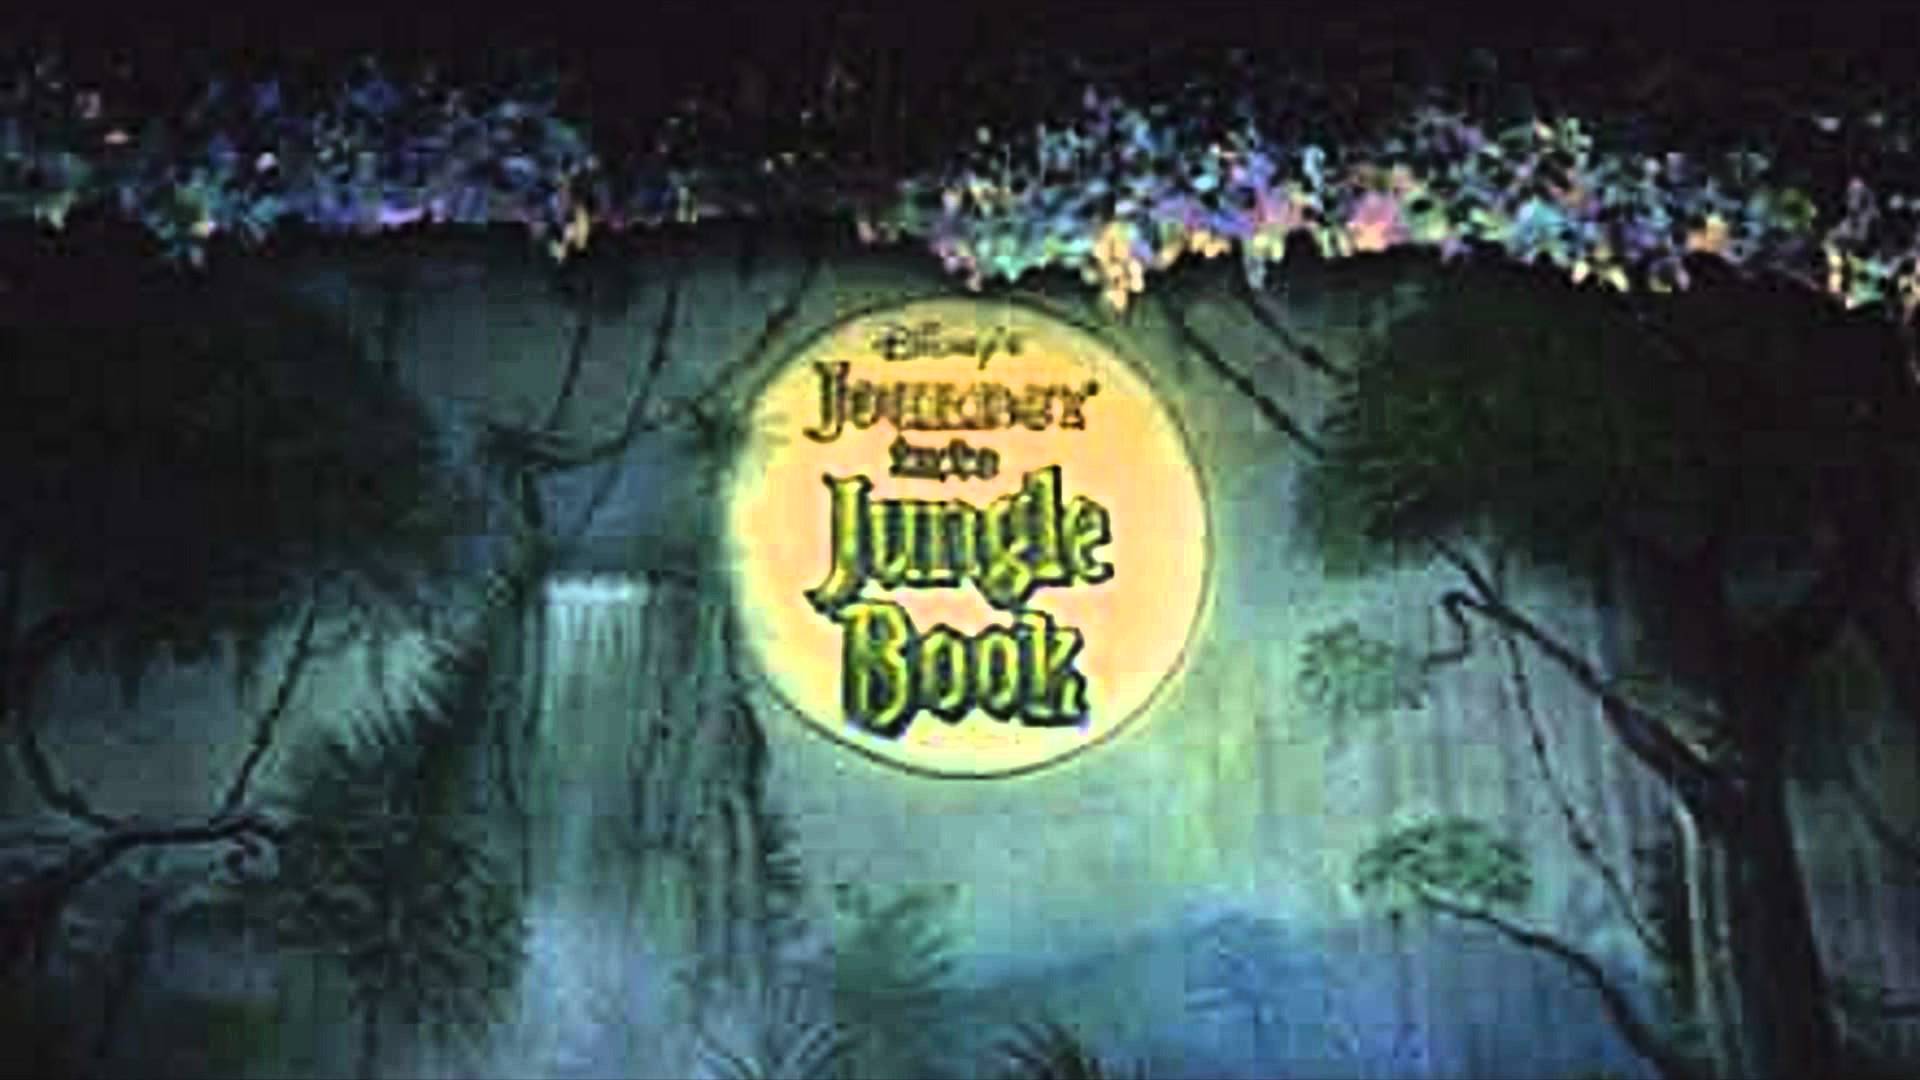 simon's journey into the jungle